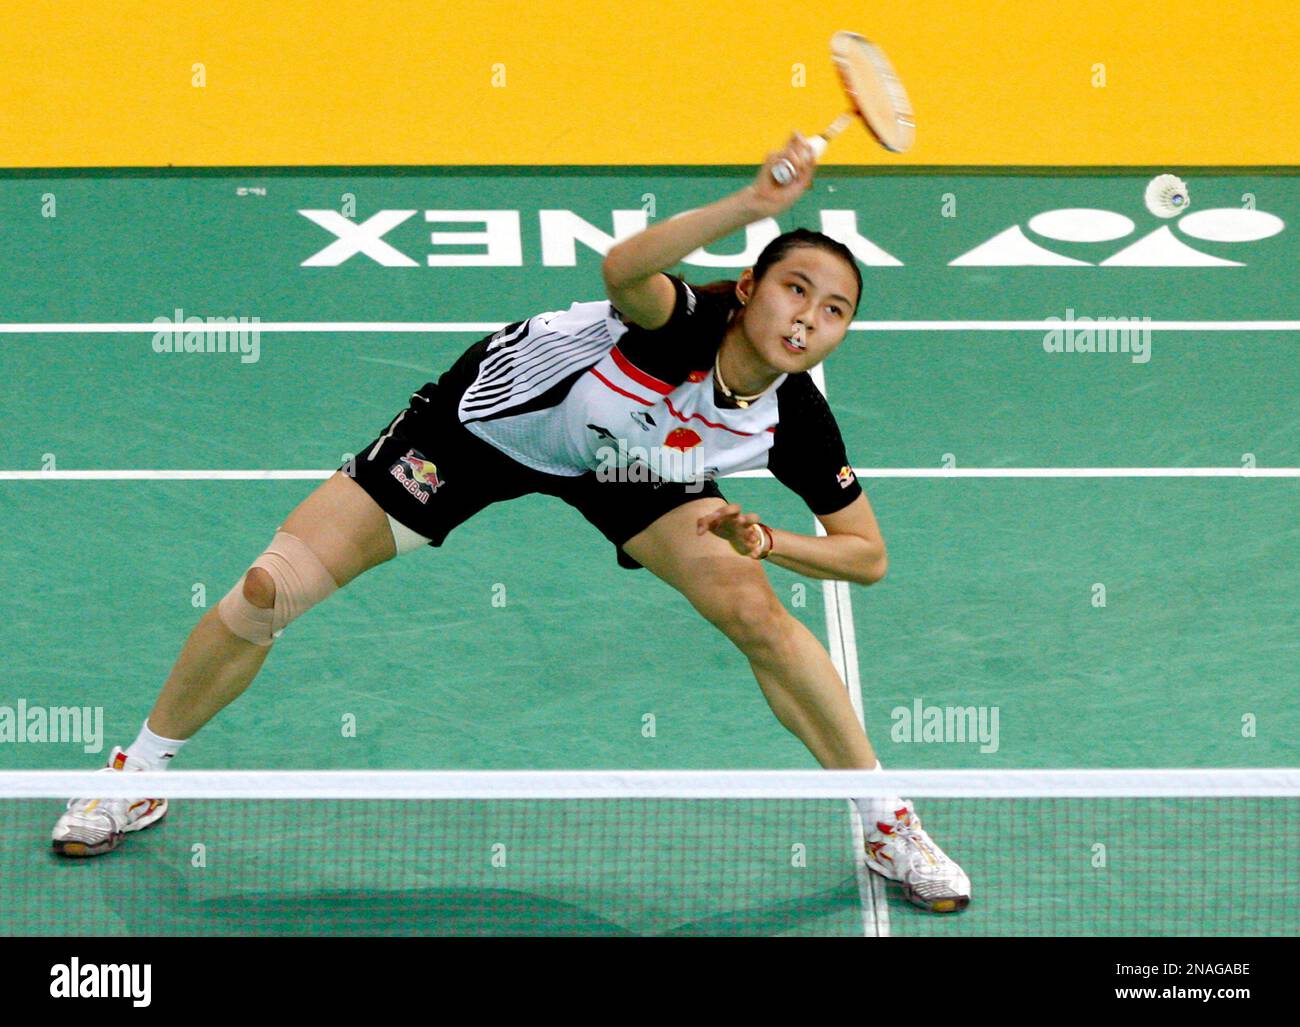 Chinas Wang Yihan returns a shot against Indias Saina Nehwal during their womens singles semifinal match of the Malaysia Open Badminton Superseries in Kuala Lumpur, Malaysia, Saturday, Jan